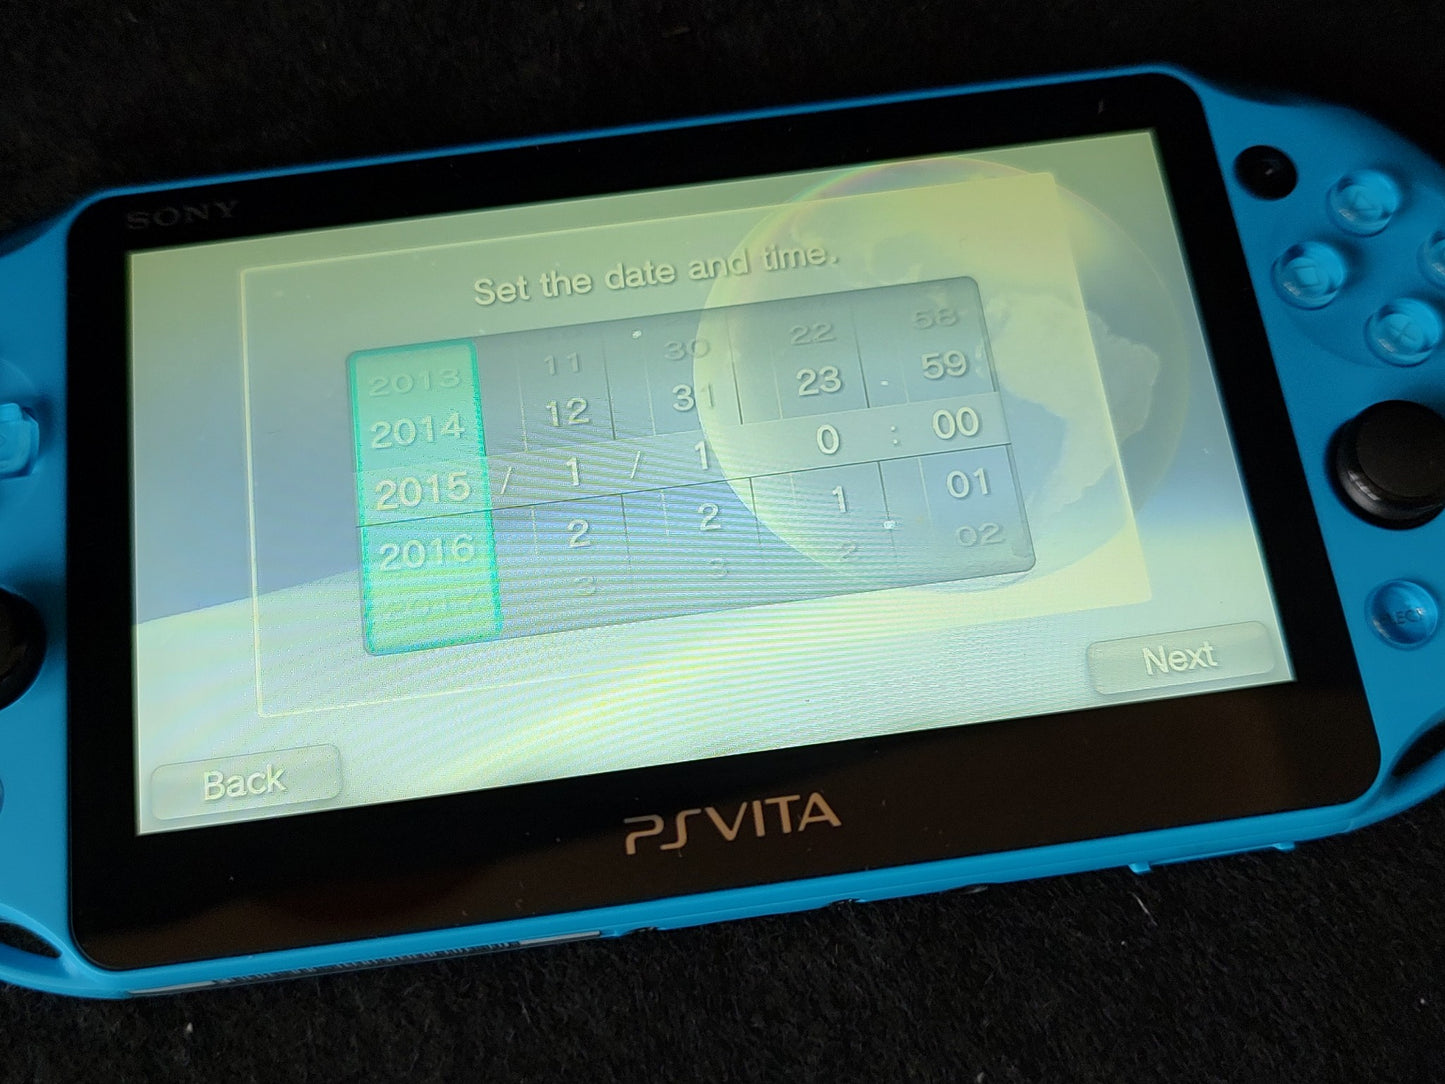 SONY PS Vita PCH-2000 Aqua Blue Console 1GB, w/Manual Box set, Working-g0122-